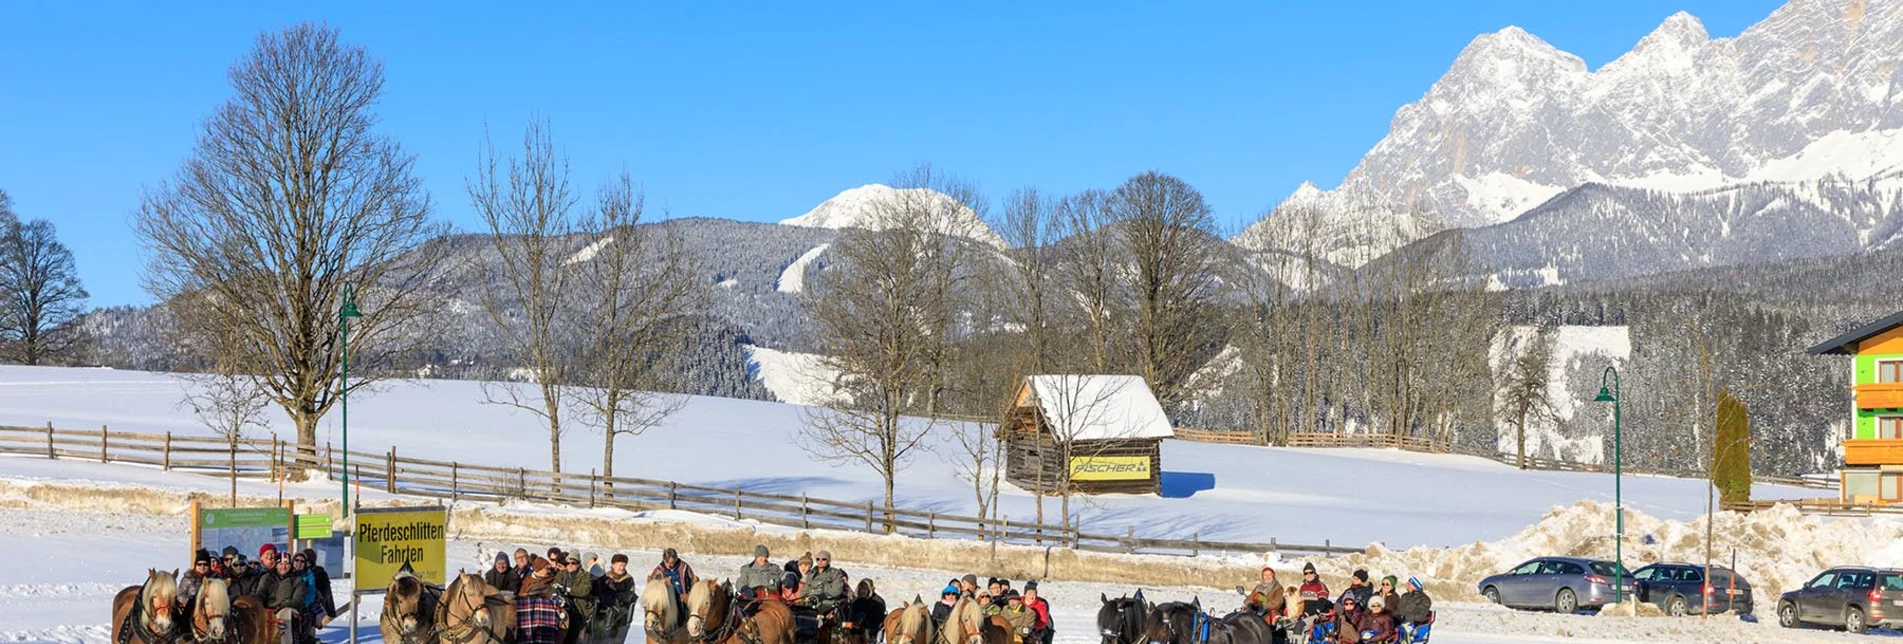 Horse Carriage Ride Sleigh ride to Untertal valley - Touren-Impression #1 | © Tourismusverband Schladming - Martin Huber